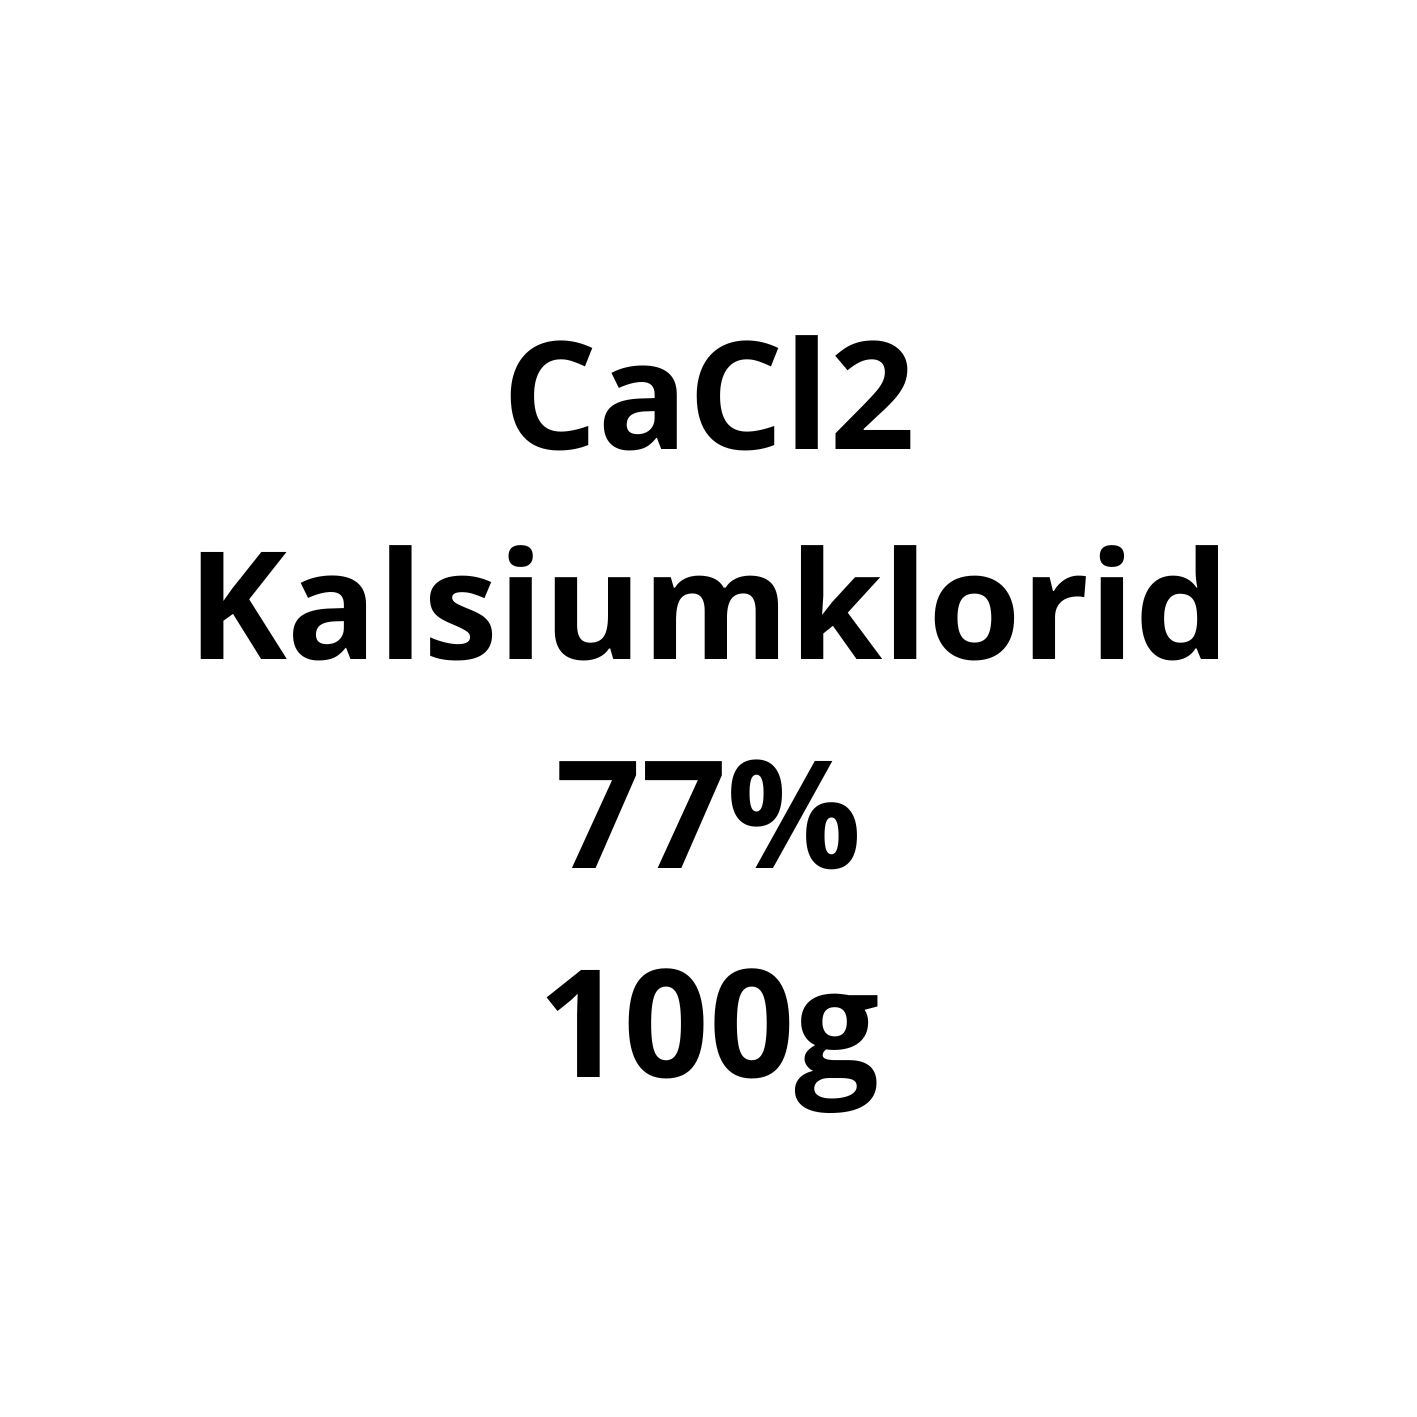 Kalsiumklorid (CaCl2) 100g